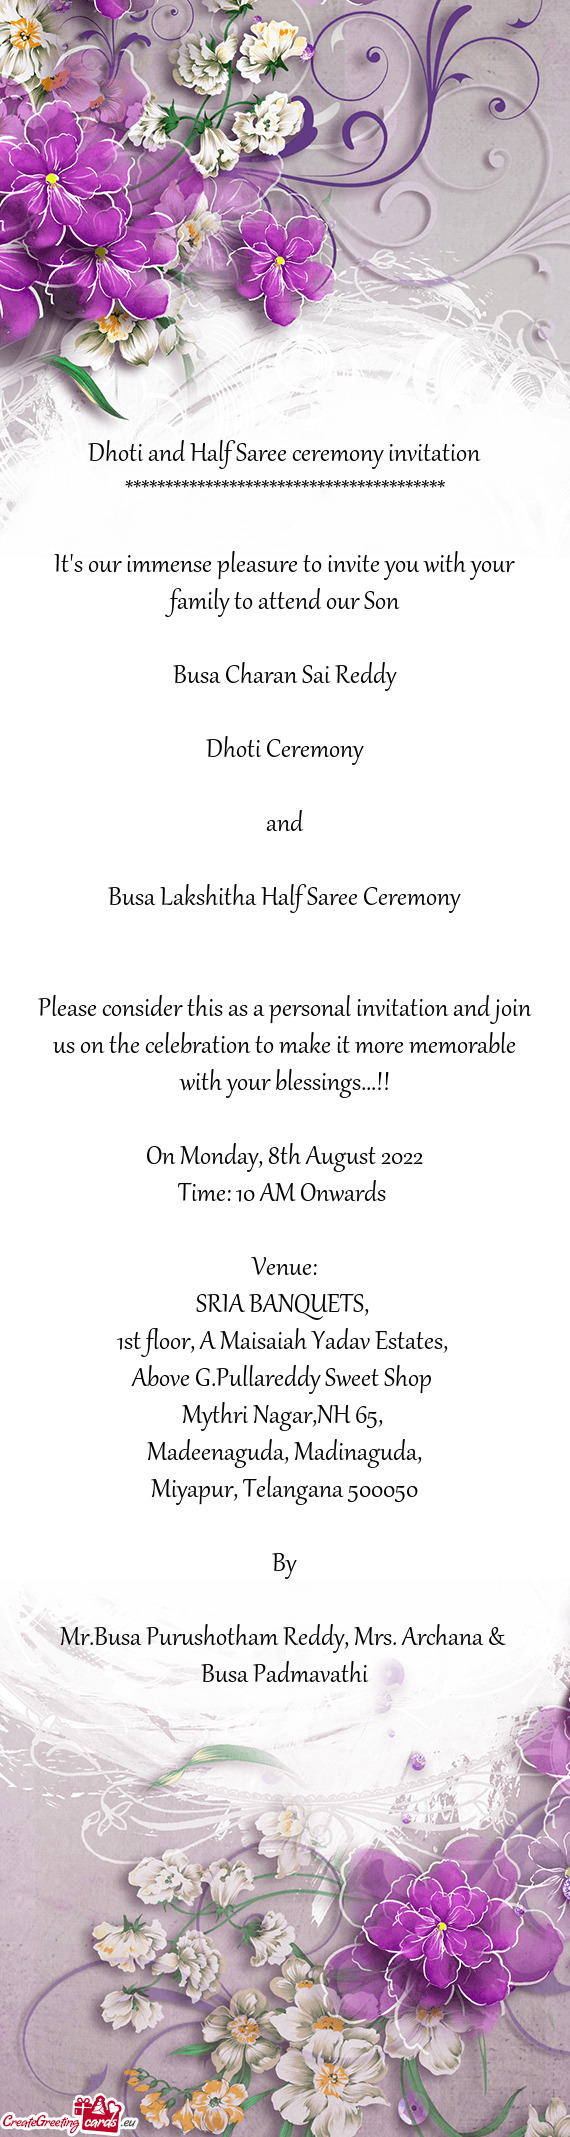 Busa Lakshitha Half Saree Ceremony